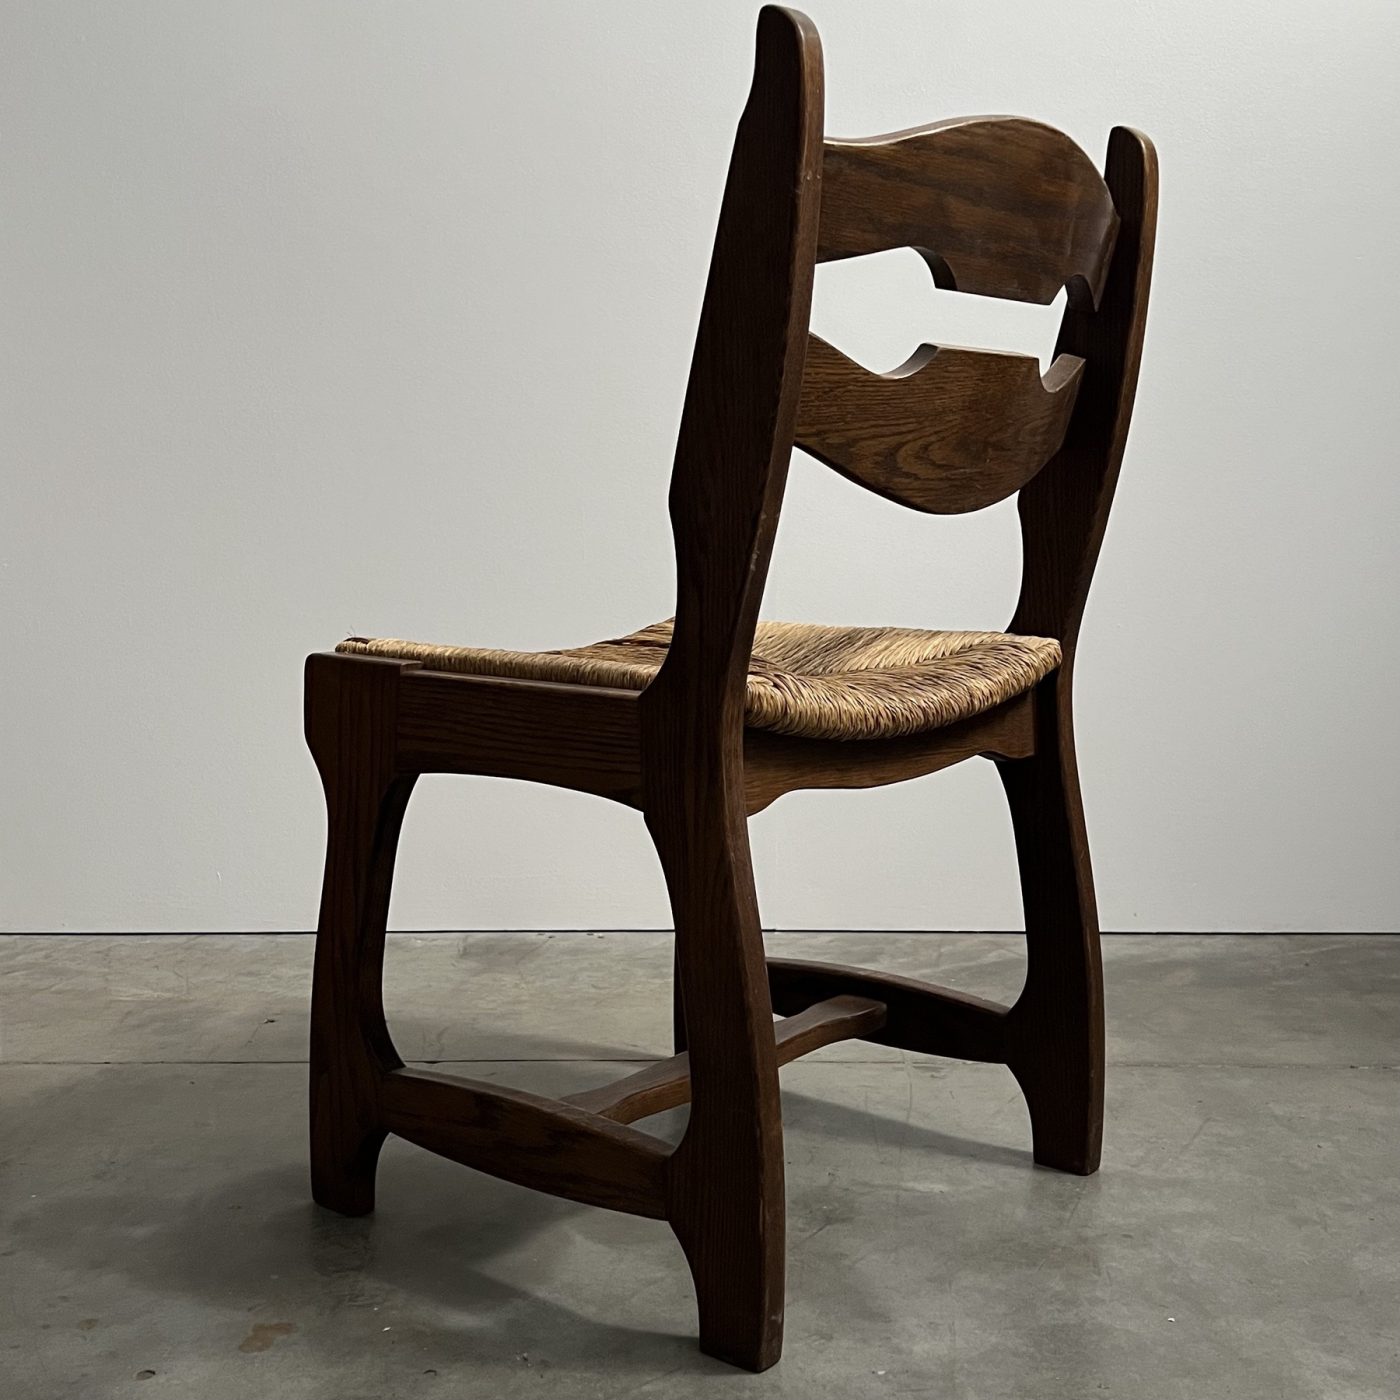 objet-vagabond-oak-chairs0007